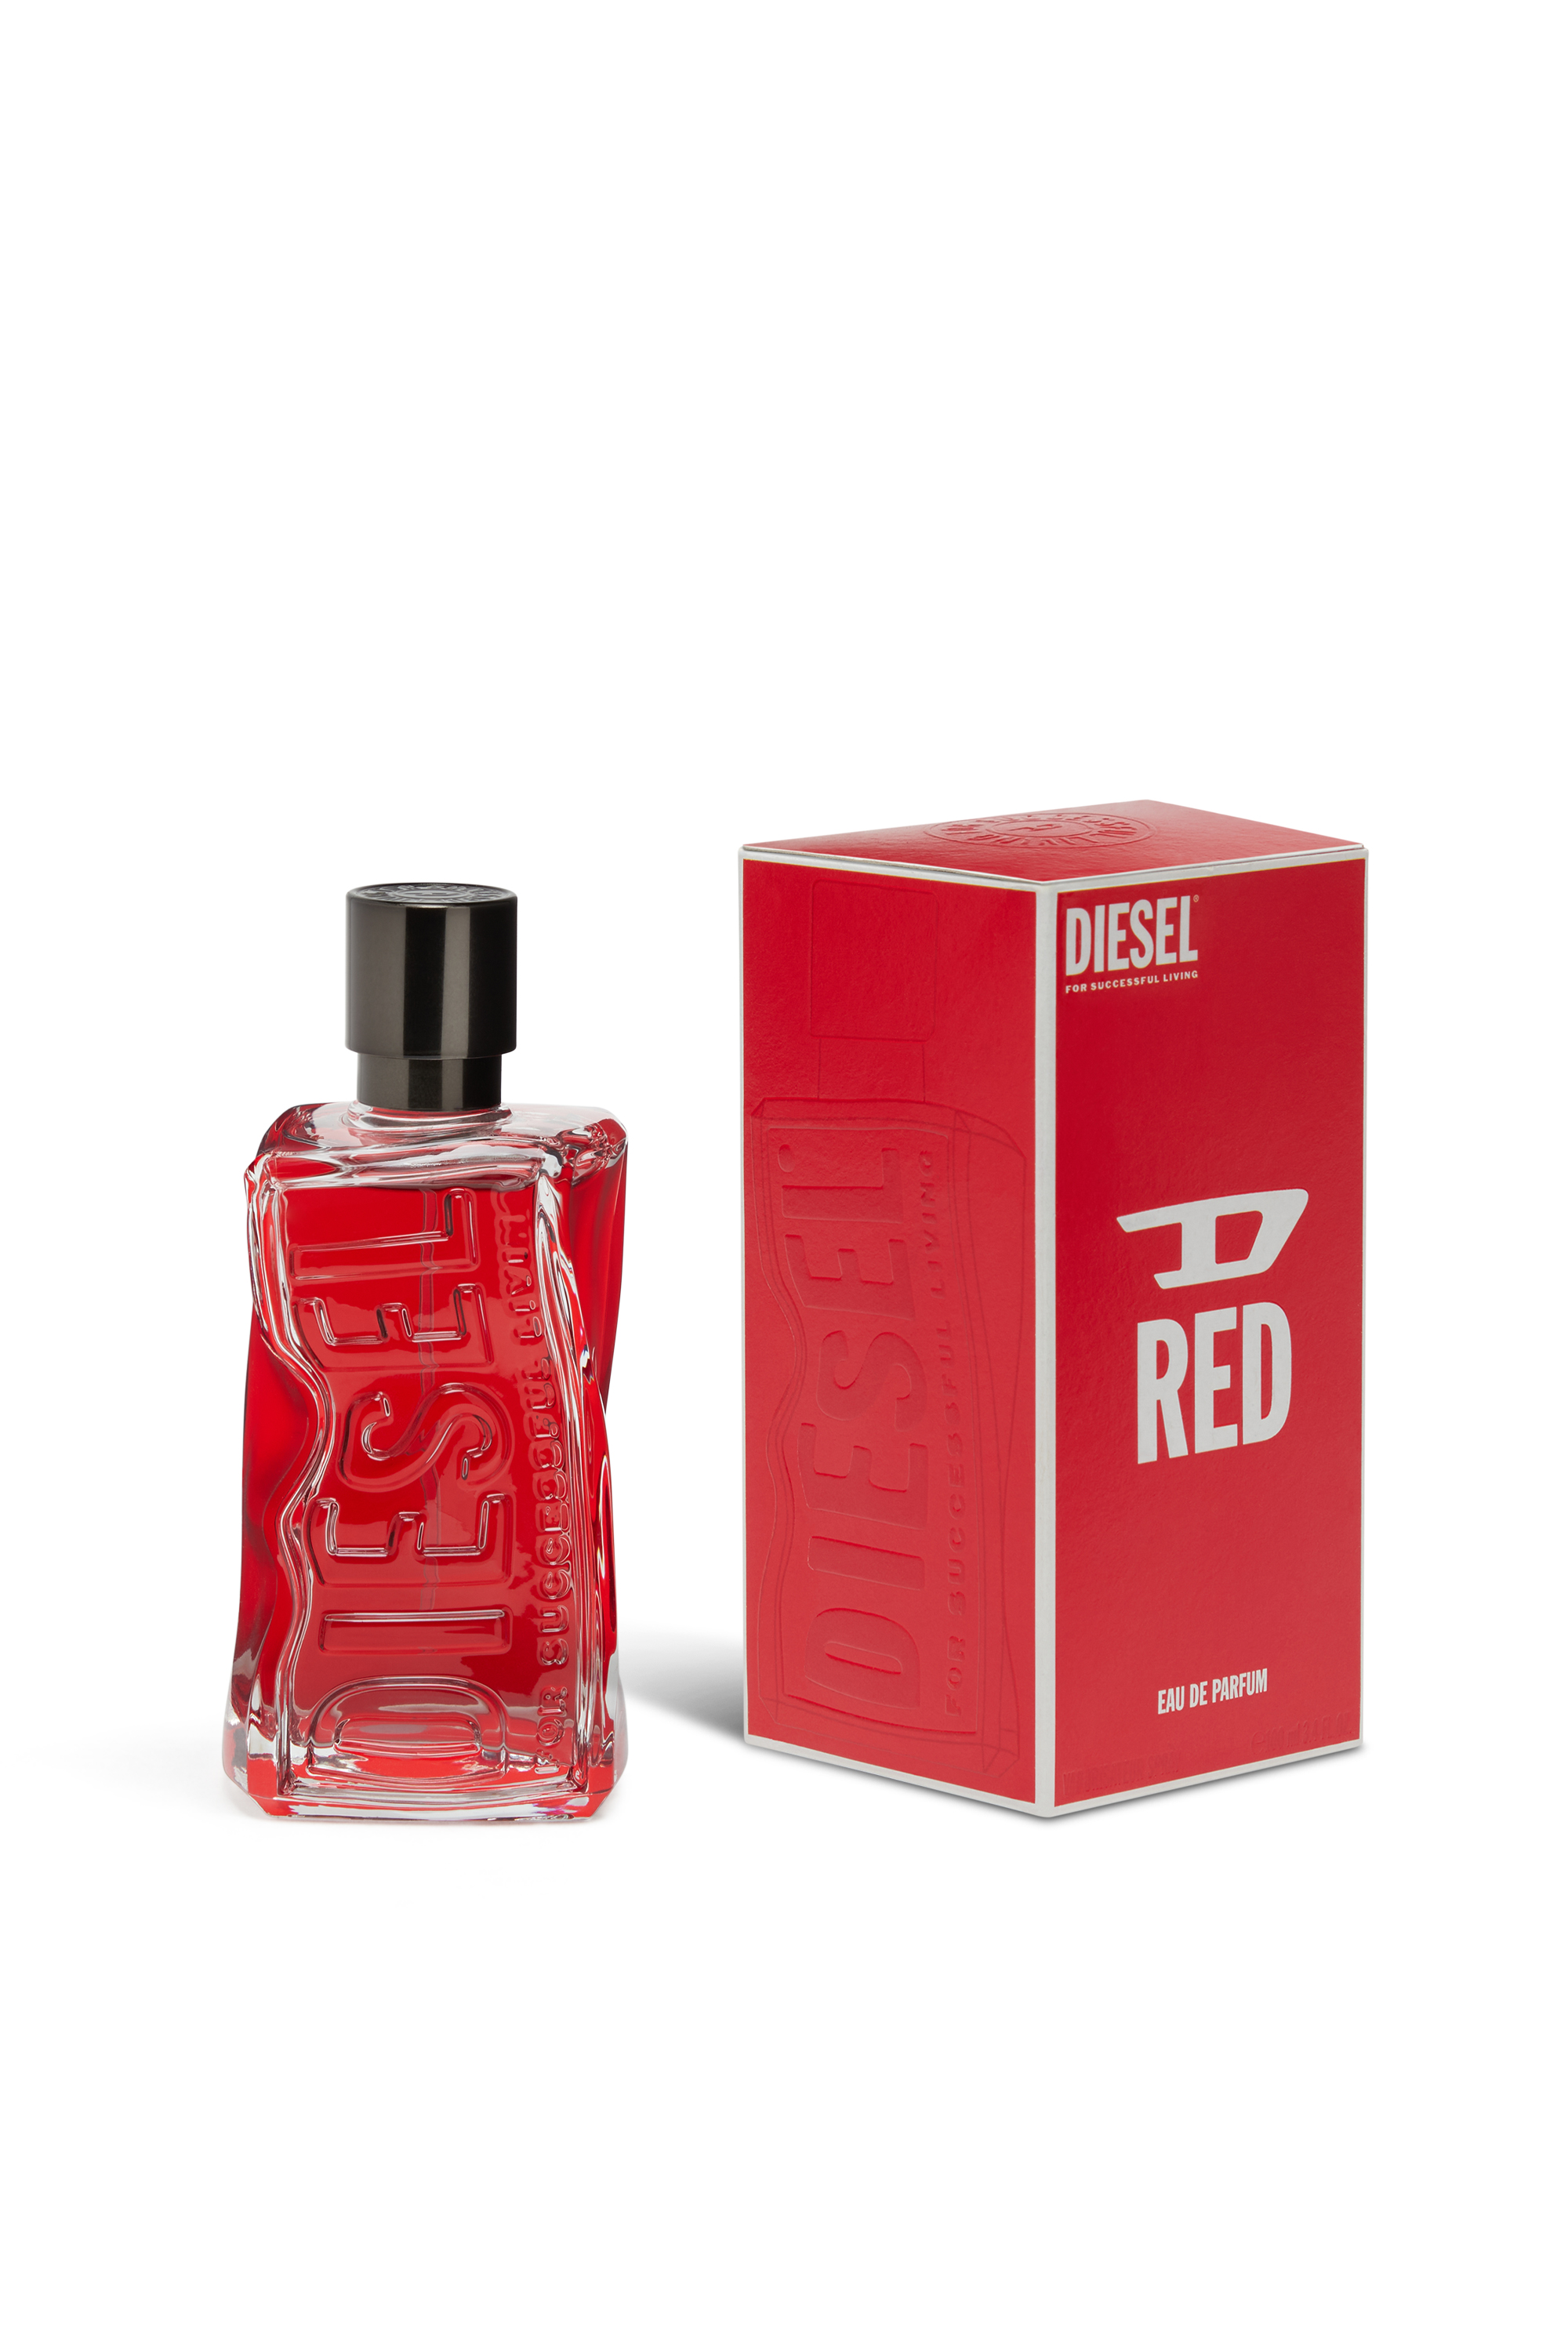 Diesel - D RED EDP 50 ML LE228700, Red - Image 2